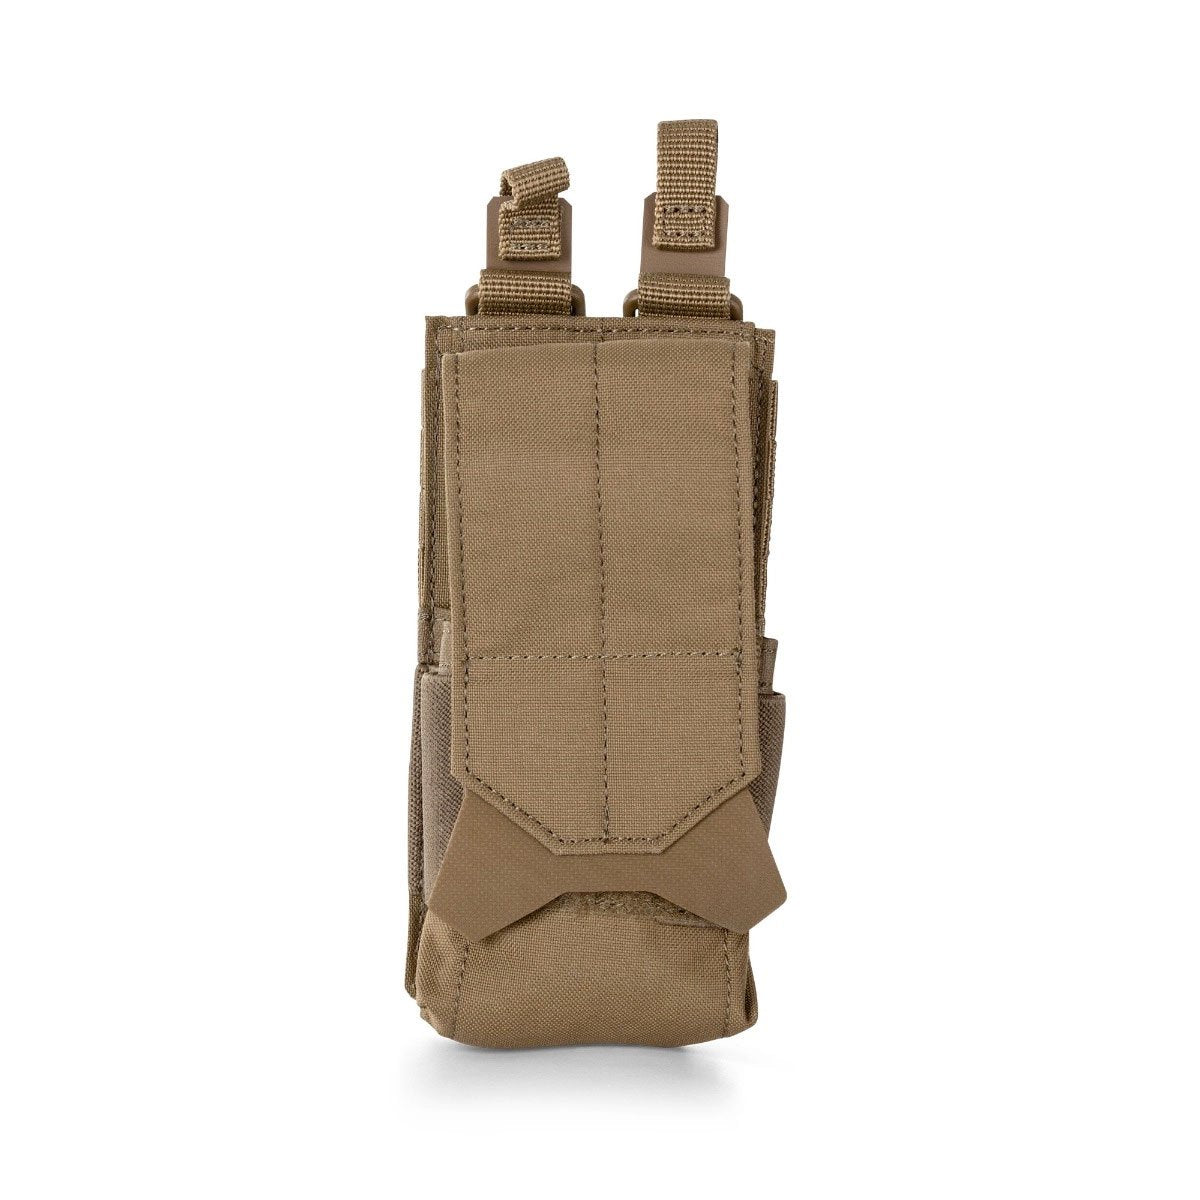 5.11 Tactical Flex Flash Bang Pouch Accessories 5.11 Tactical Kangaroo Tactical Gear Supplier Tactical Distributors Australia